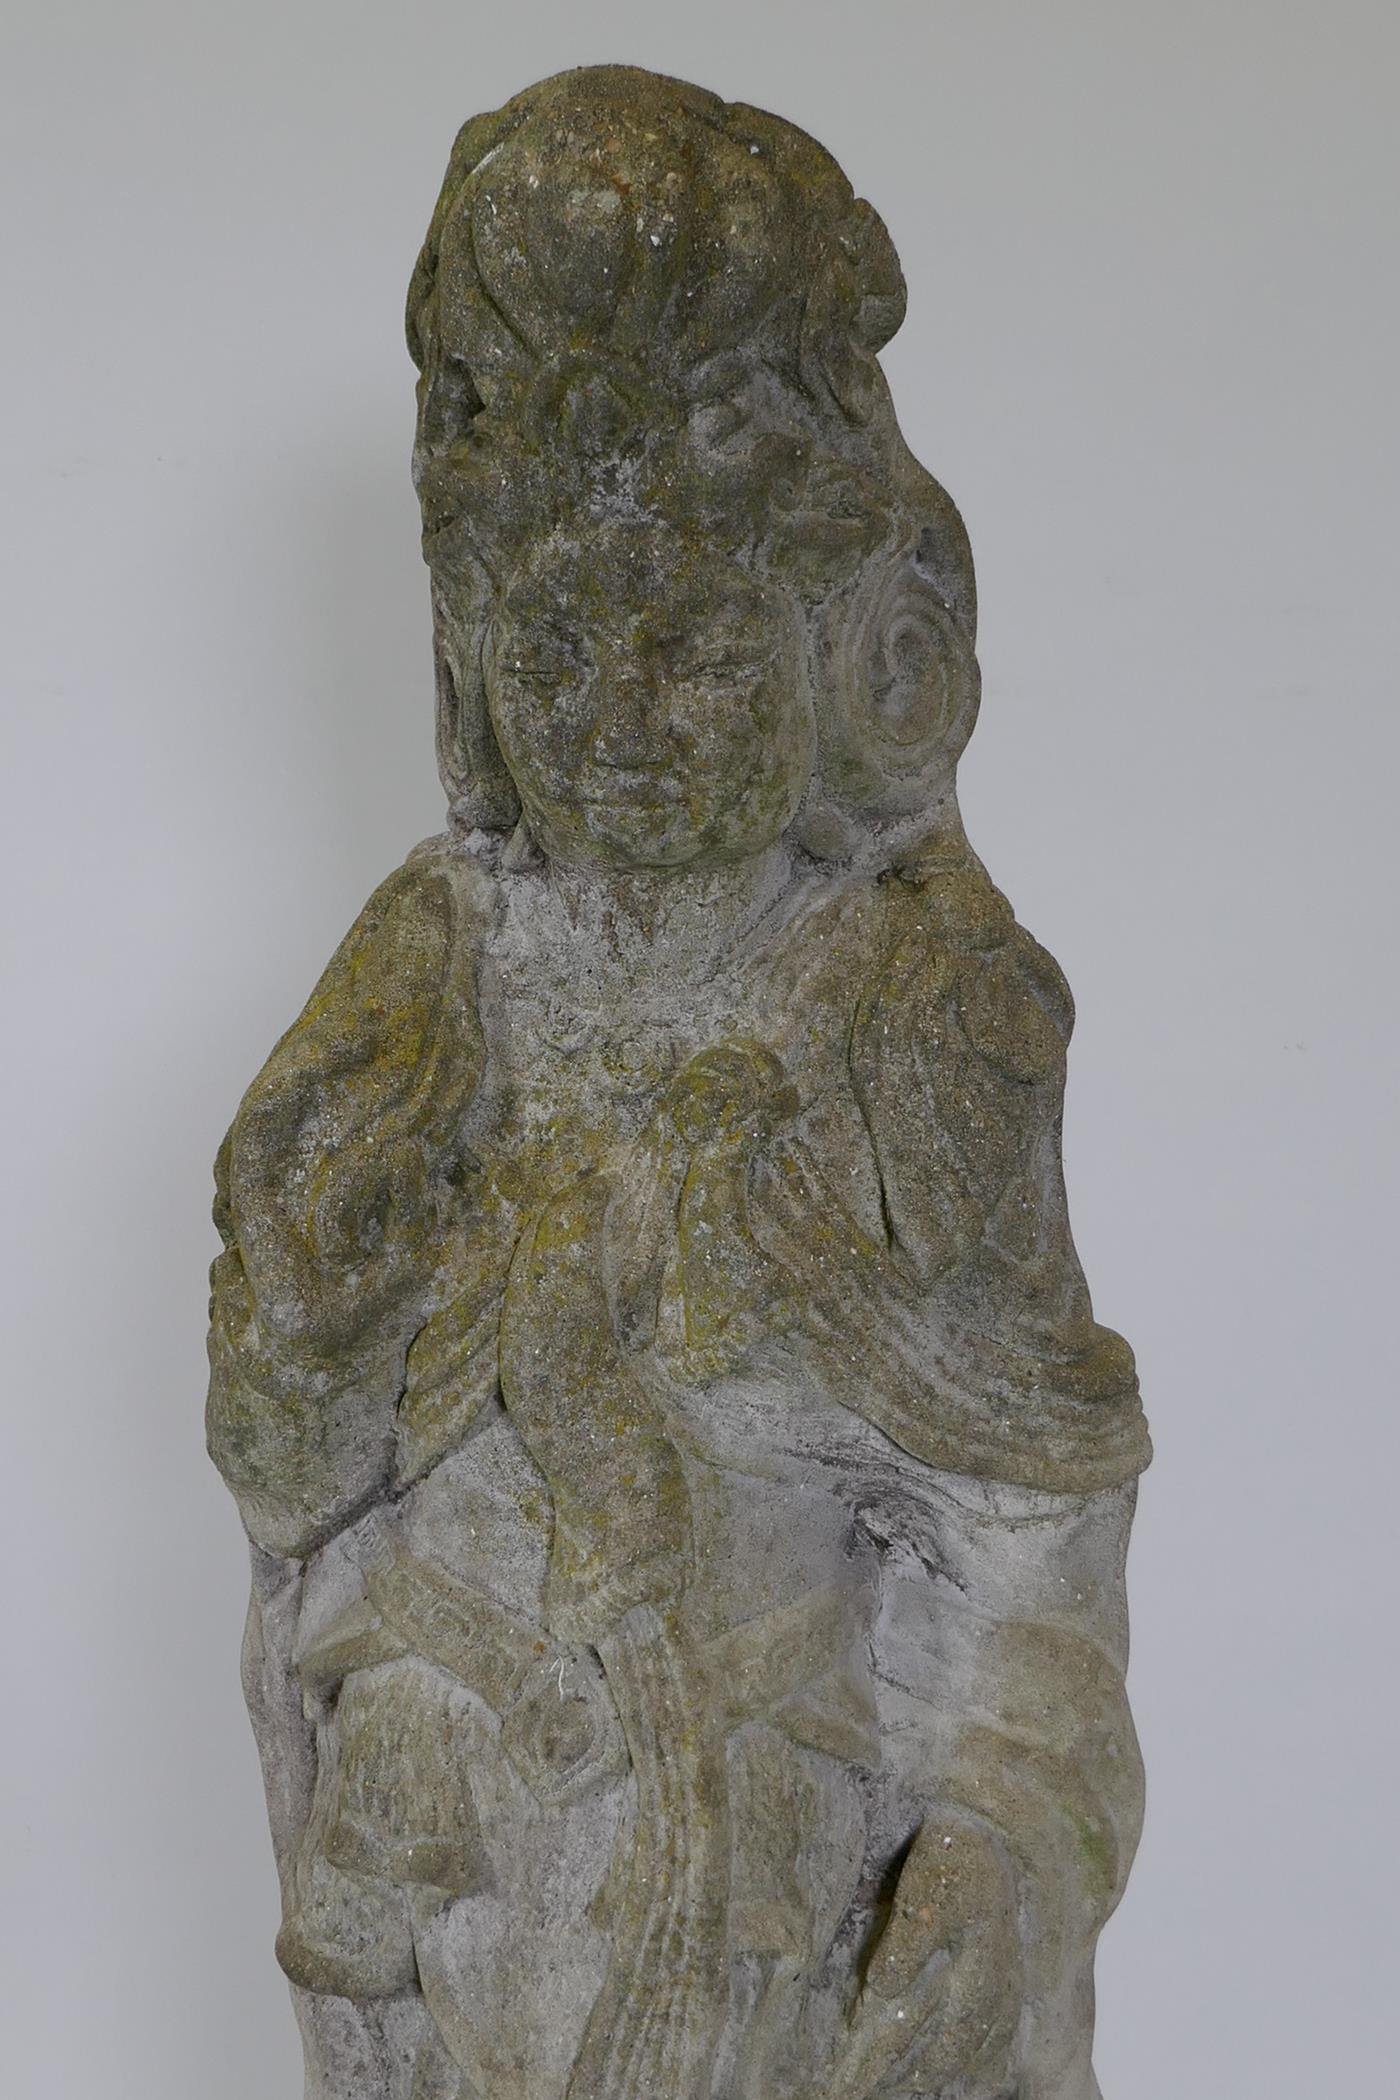 A concrete garden figure of the goddess Guan Yin, 41" high - Image 4 of 4